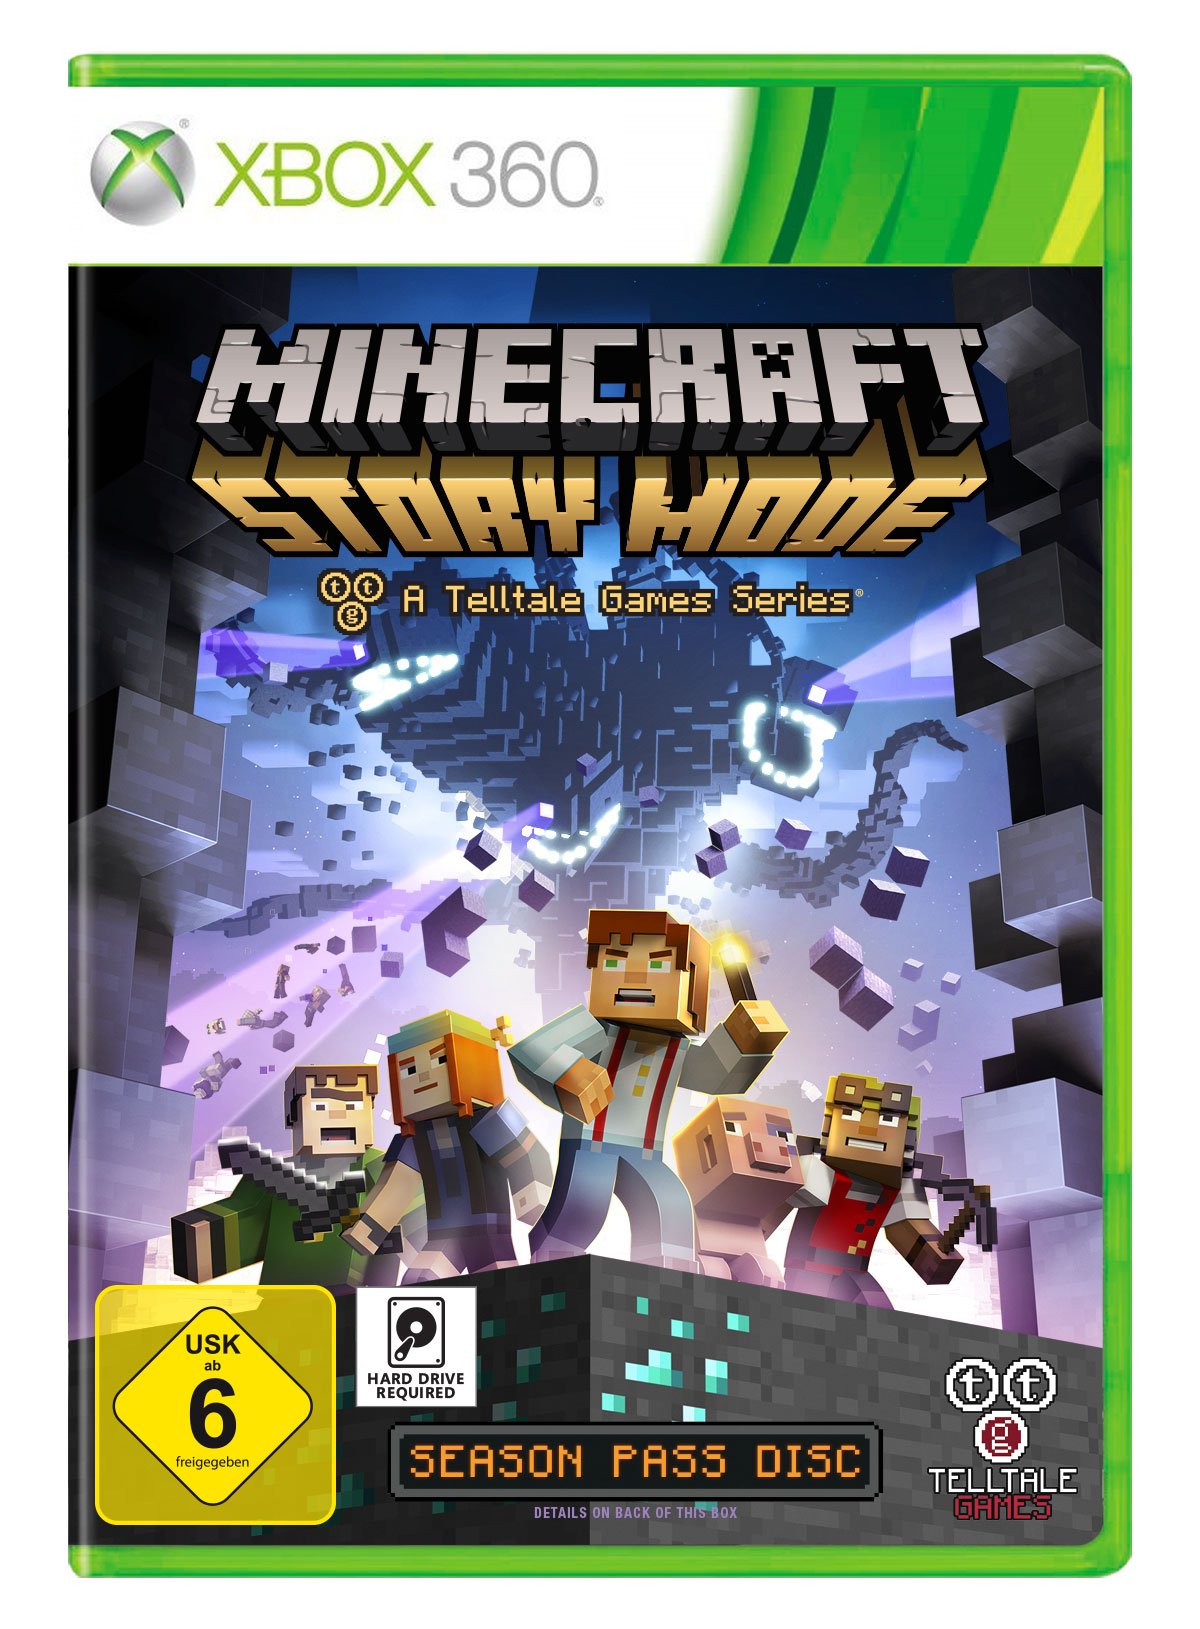 Minecraft: Story Mode - [Xbox 360]